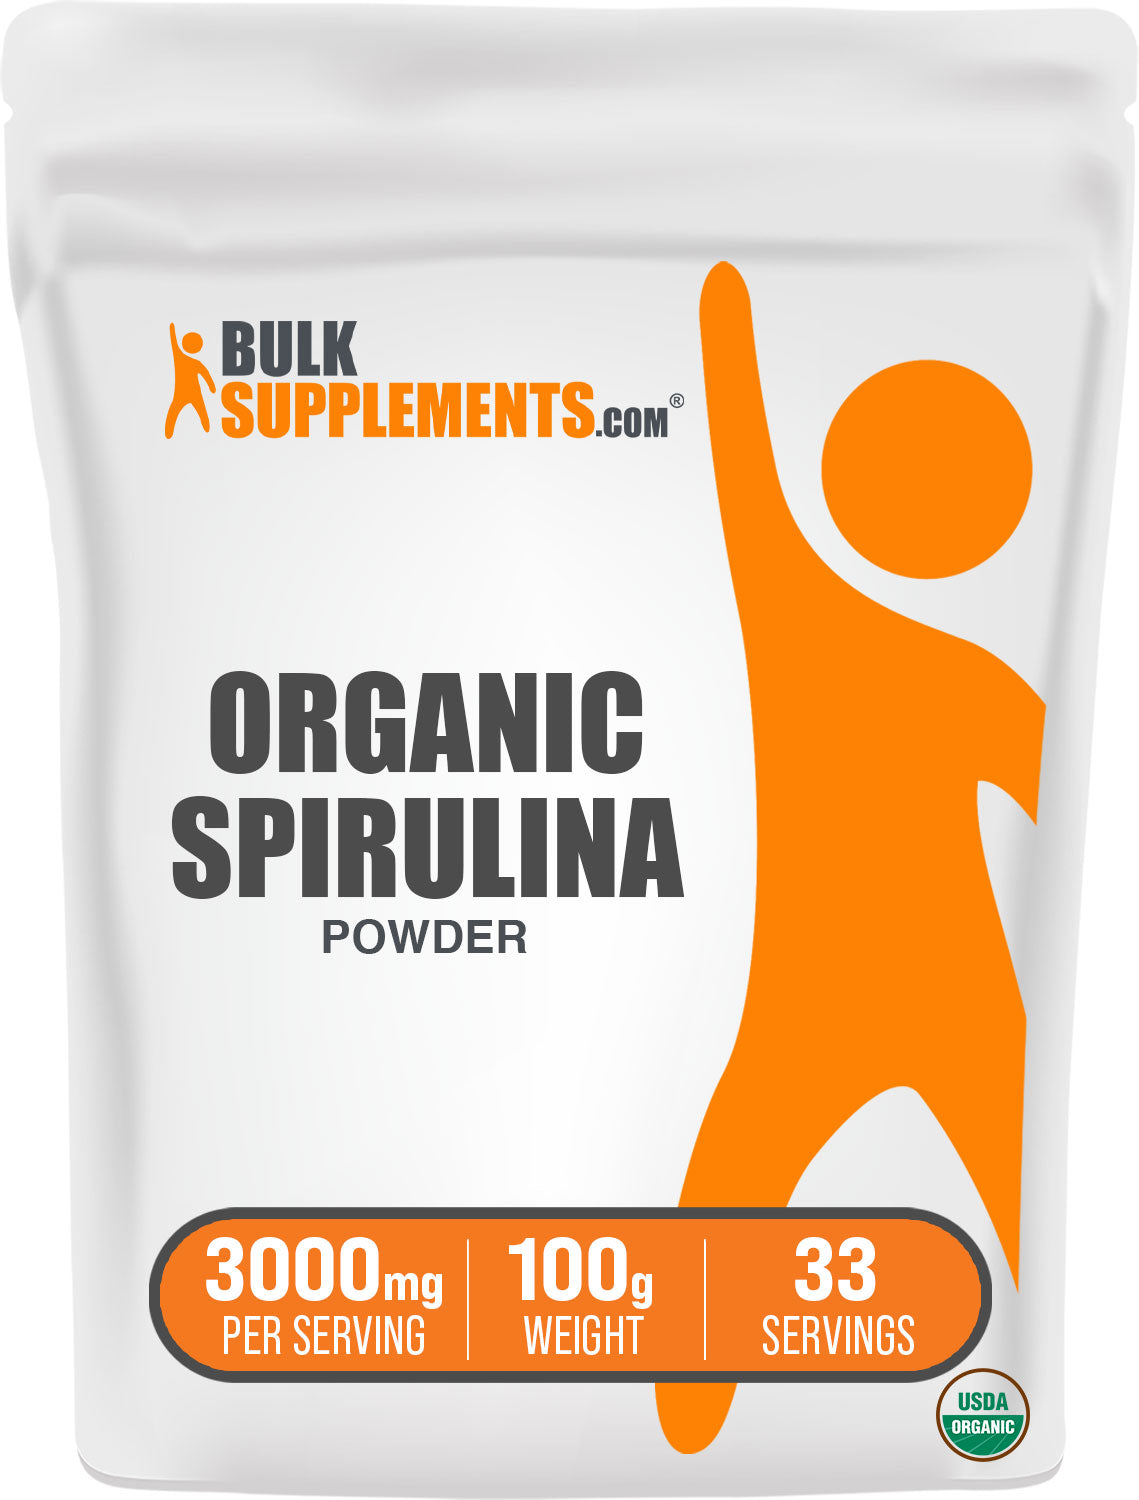  BulkSupplements.com Organic Spirulina Powder 100g Bag